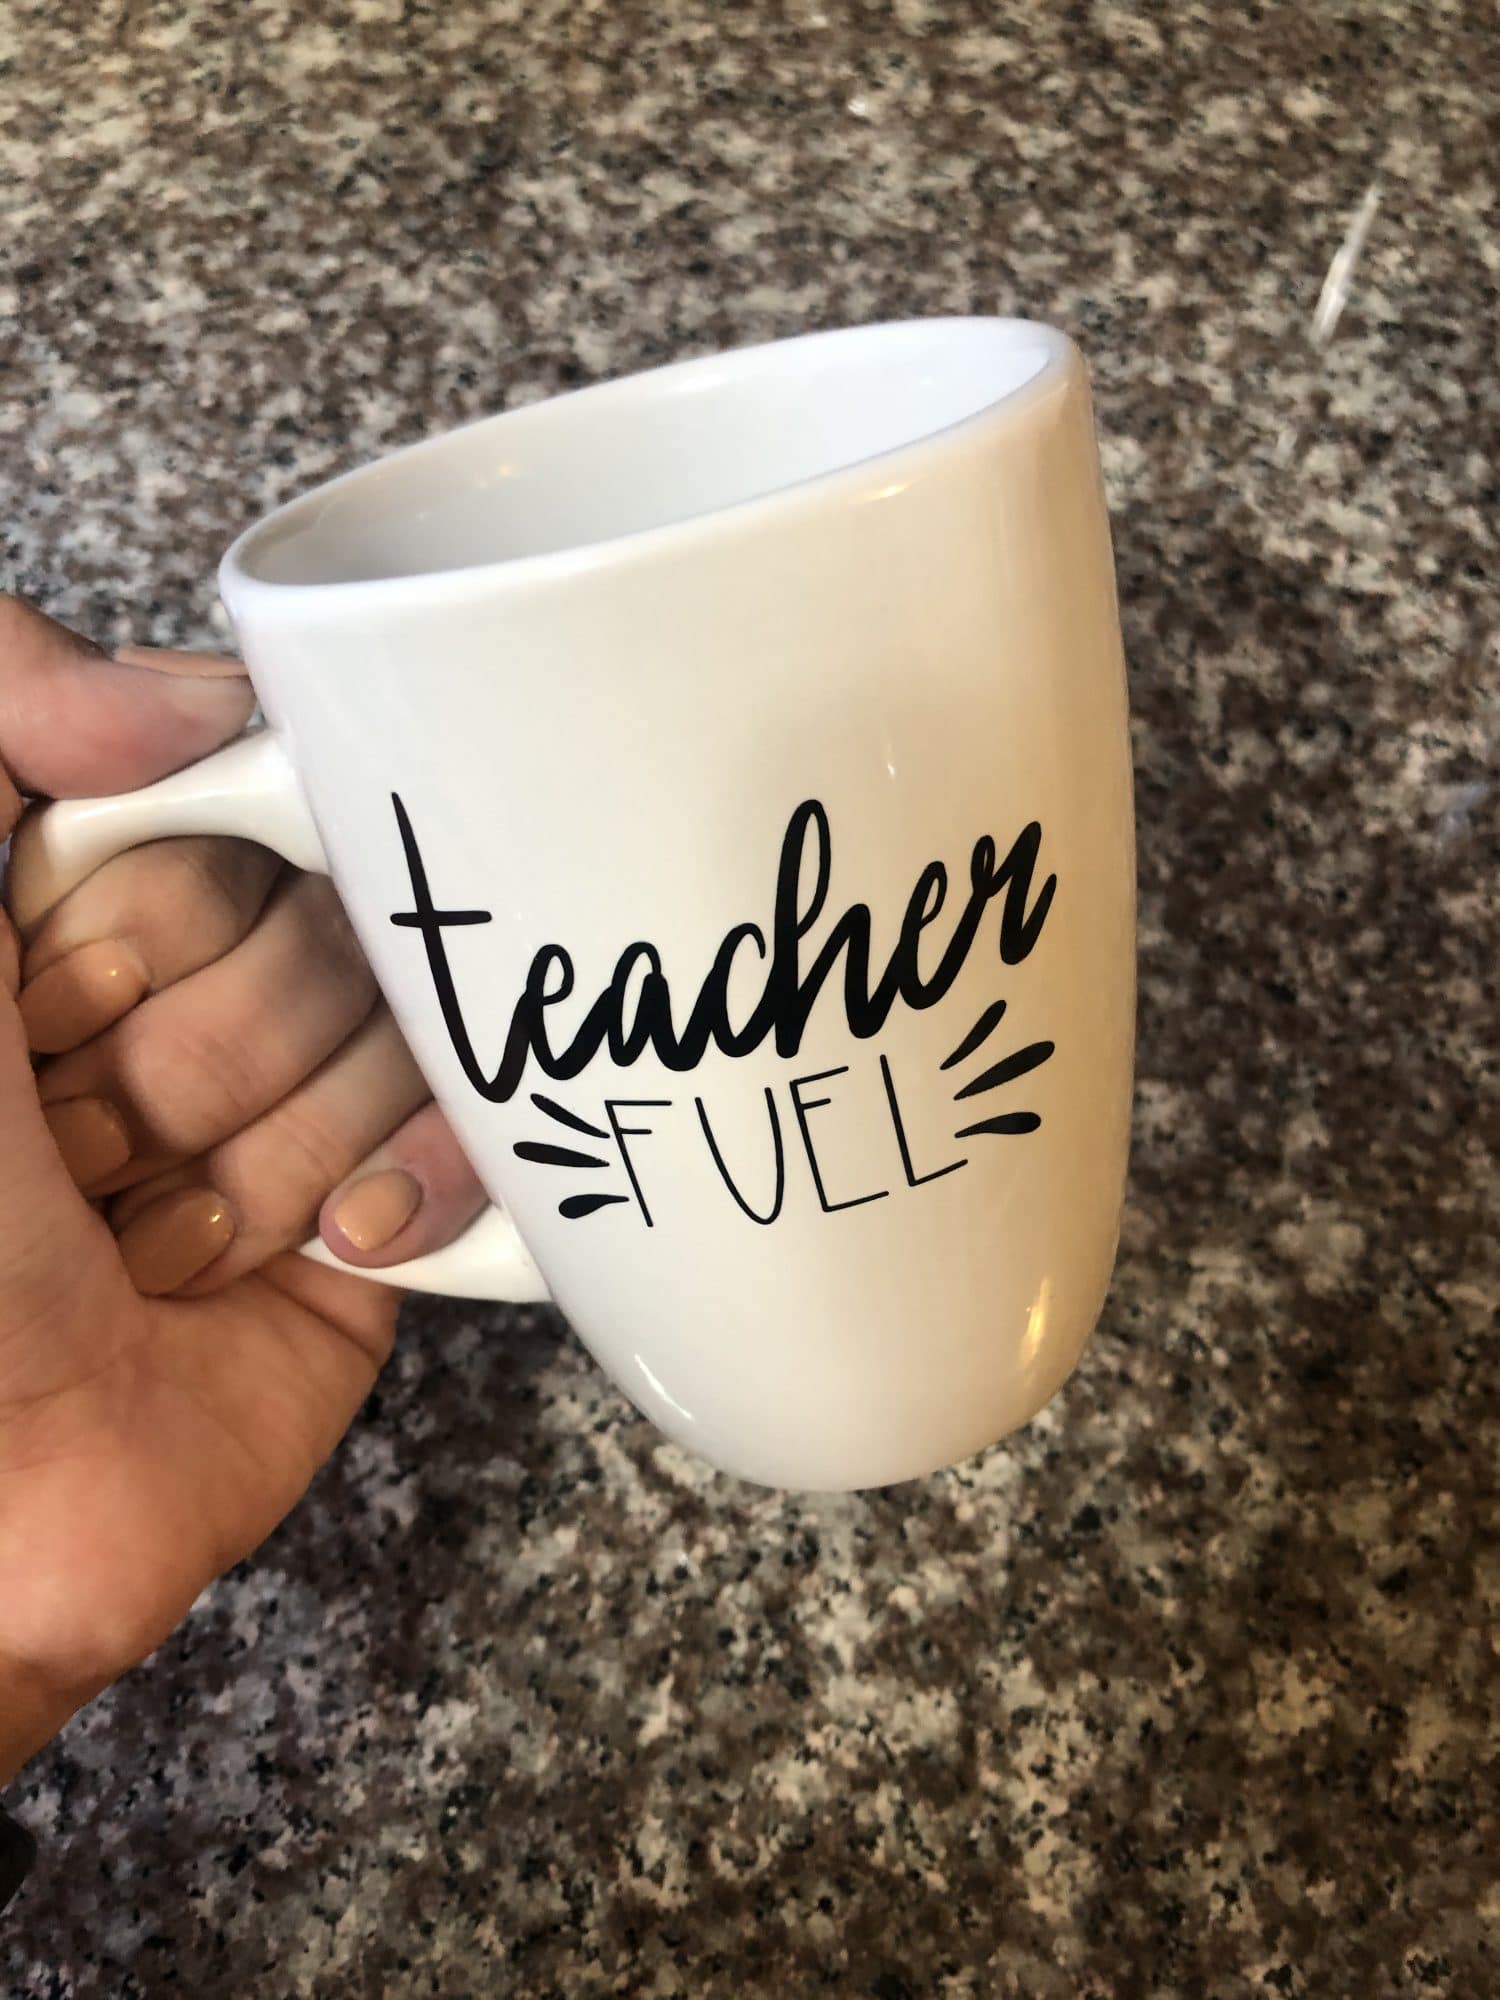 mug with "teacher fuel" written on it